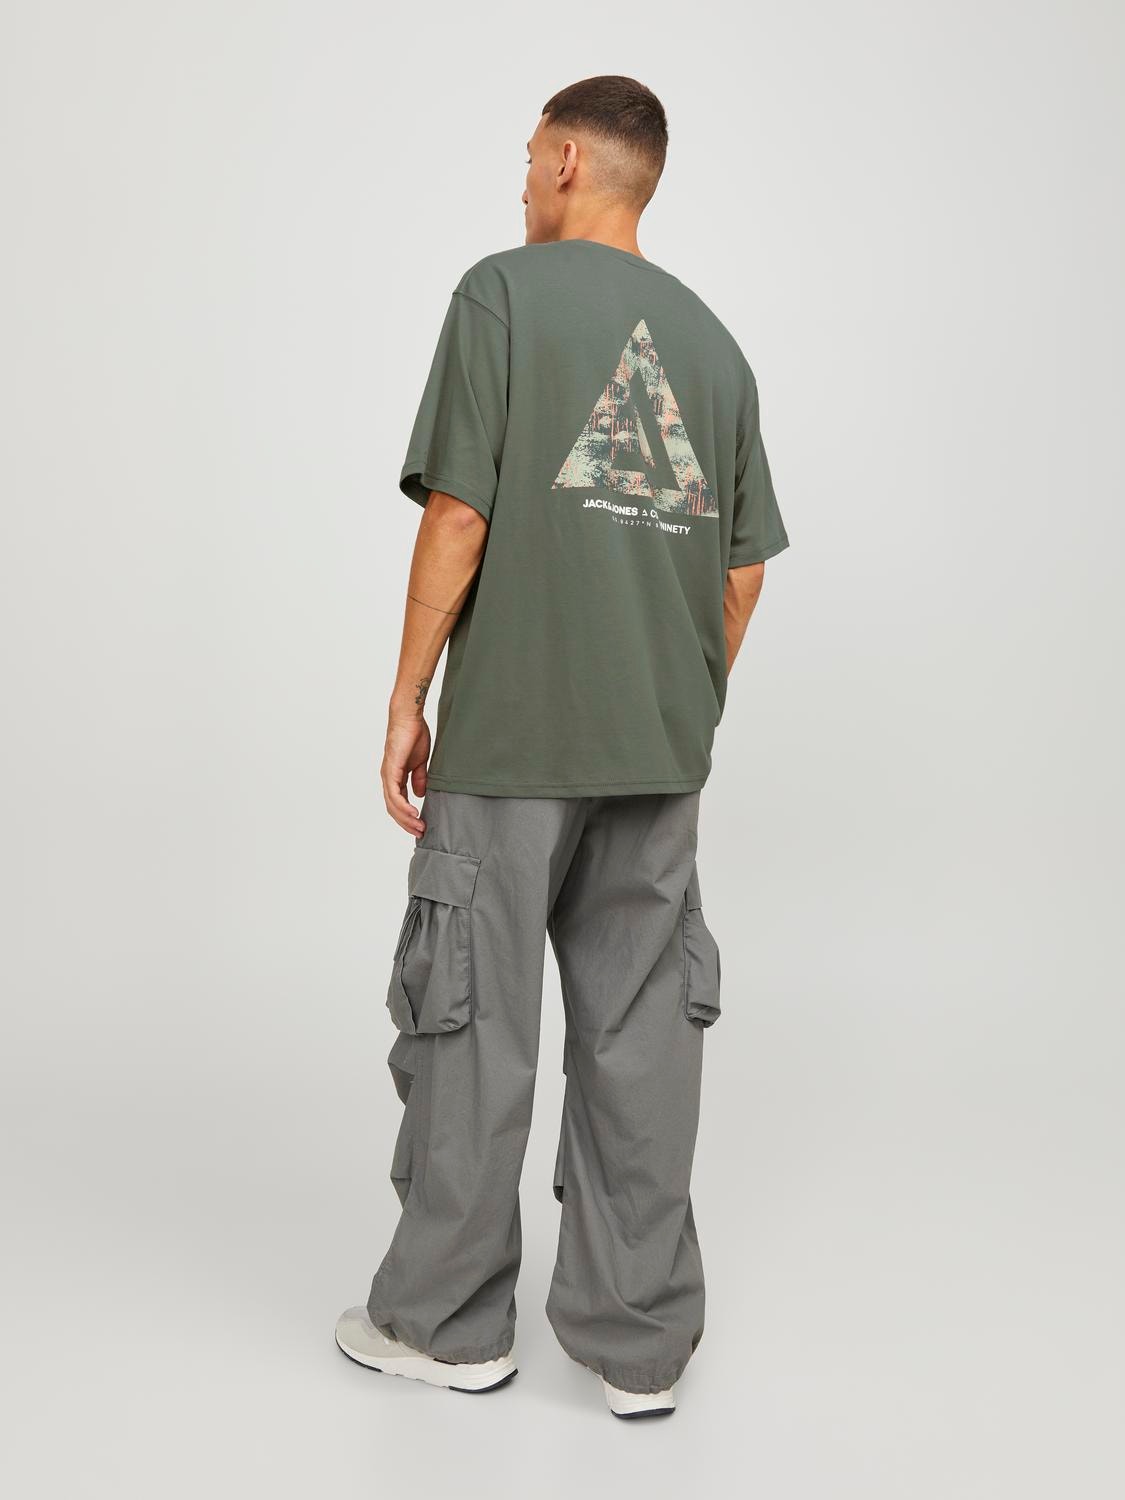 Jack & Jones T-shirt Estampar Decote Redondo -Agave Green - 12253435